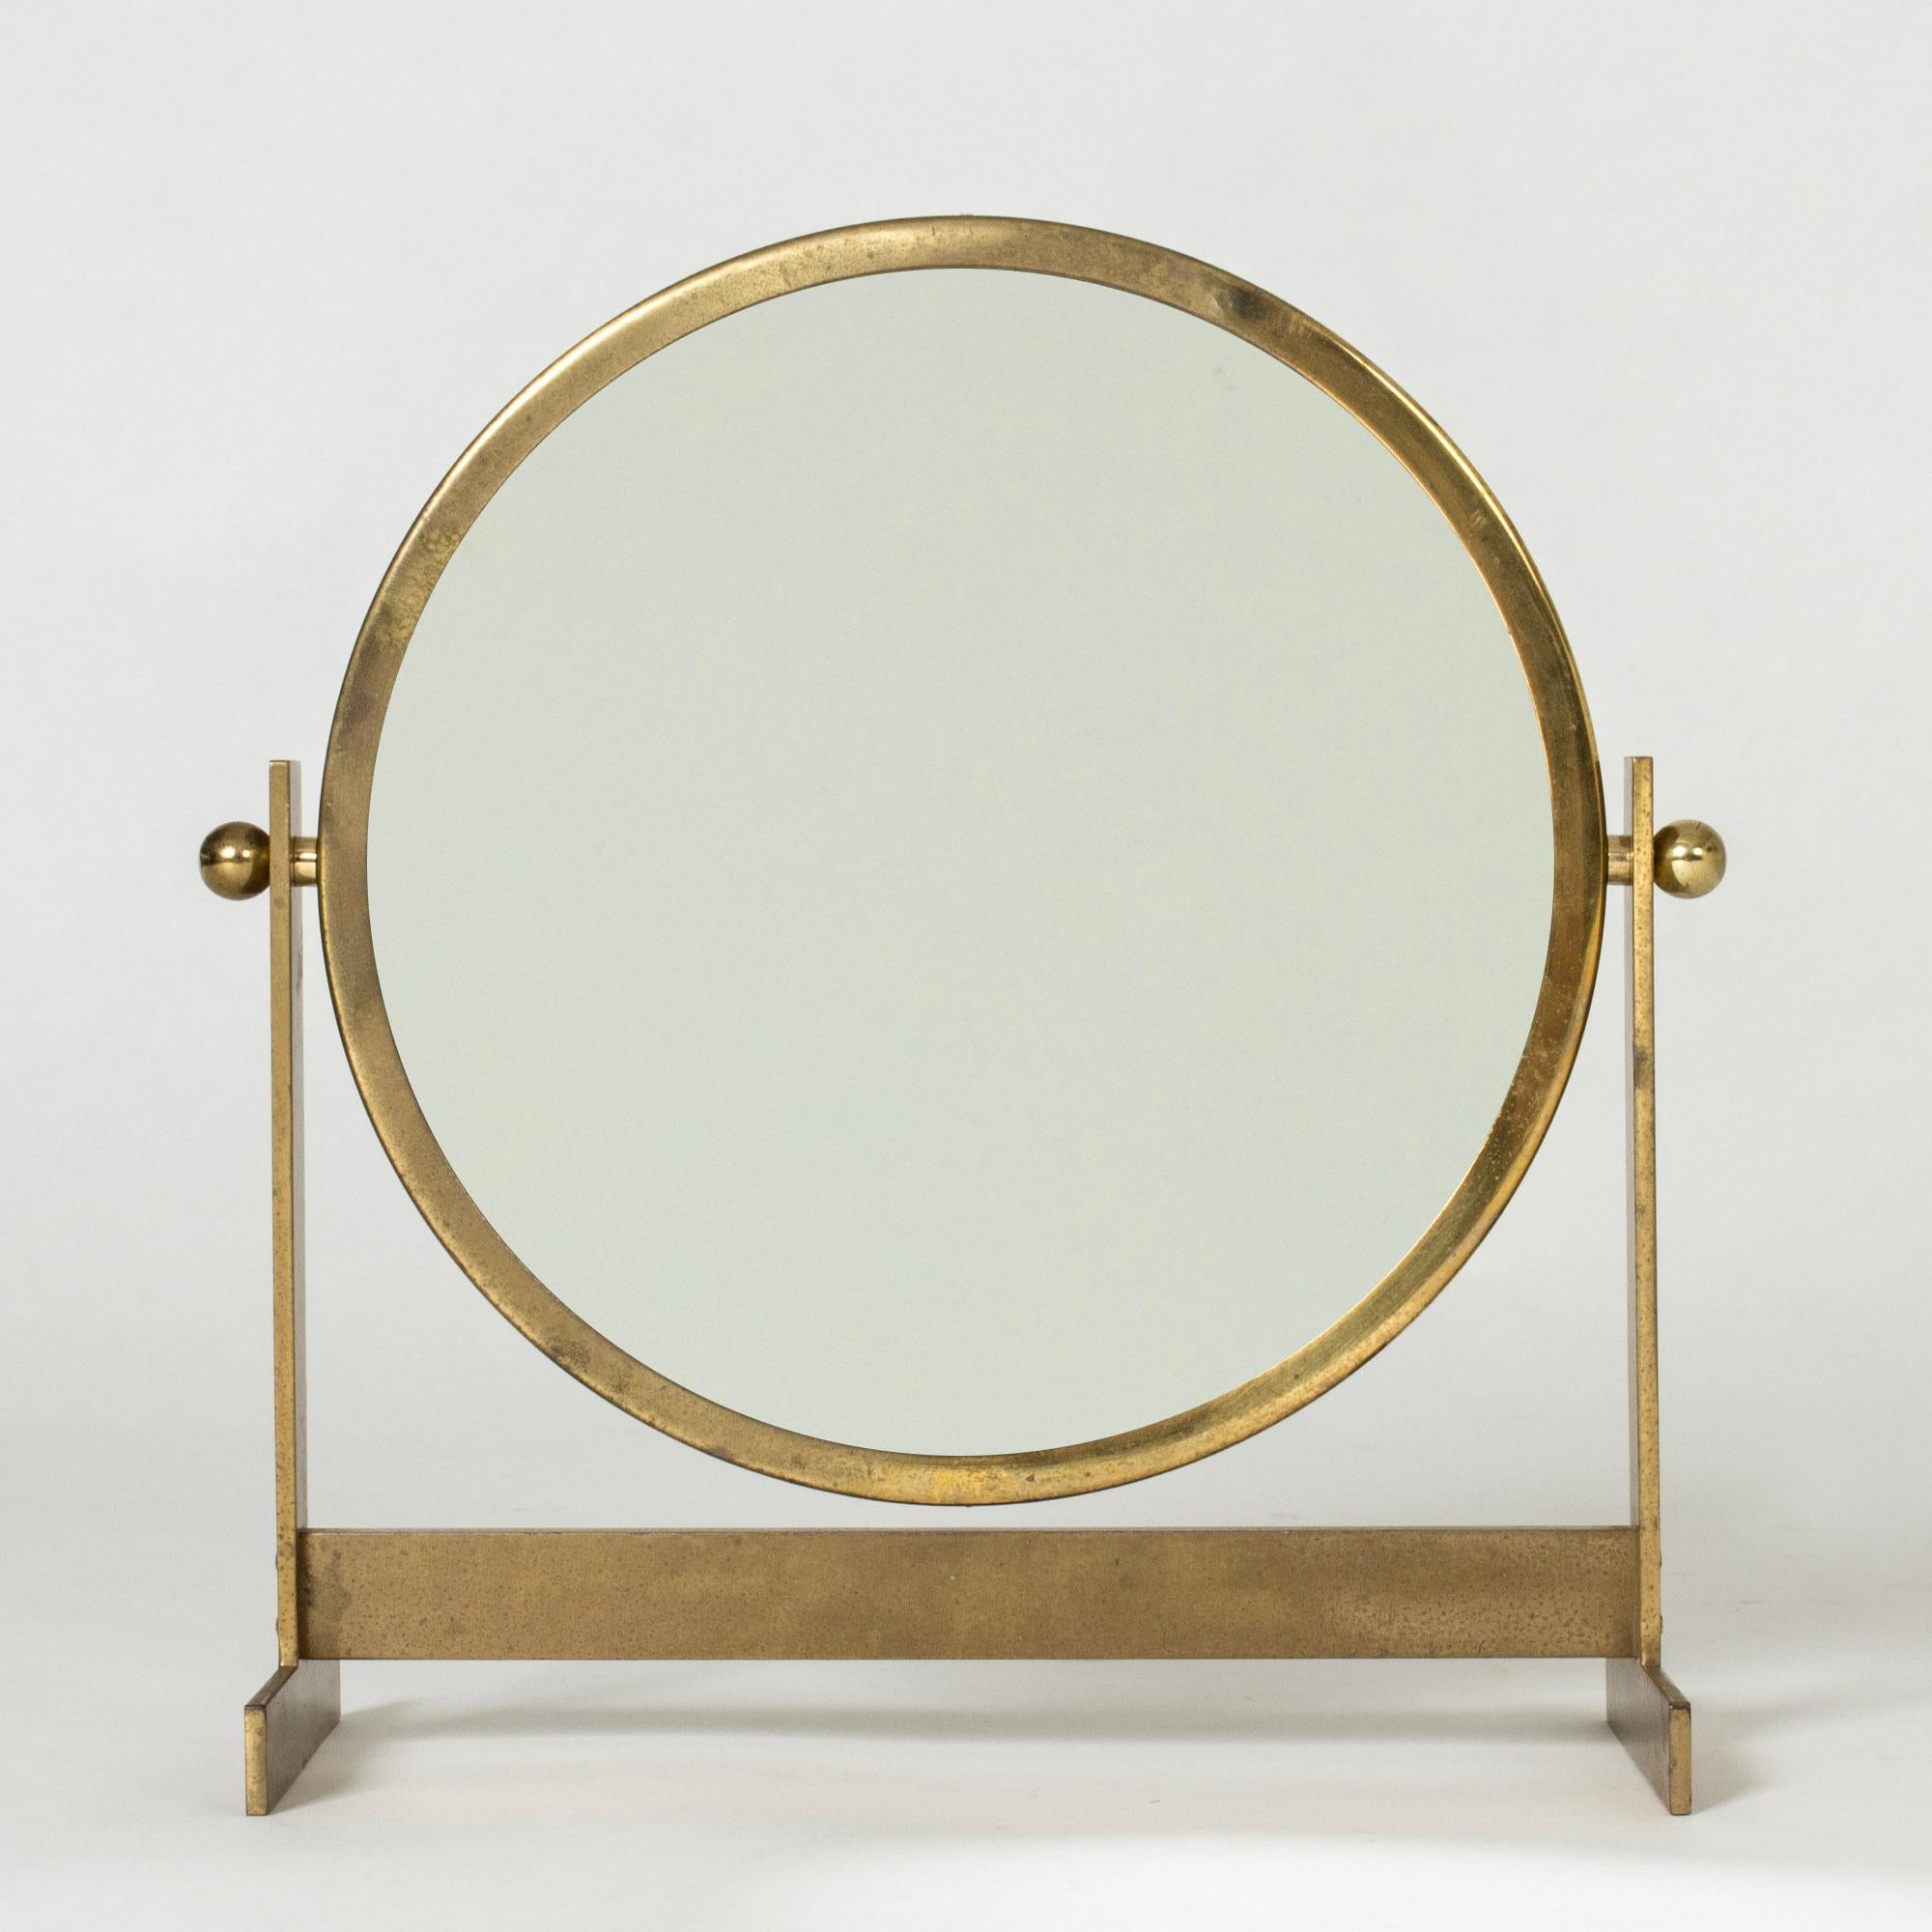 Scandinavian Modern Midcentury Modern Brass table mirror from HI-Gruppen, Sweden, 1950s For Sale